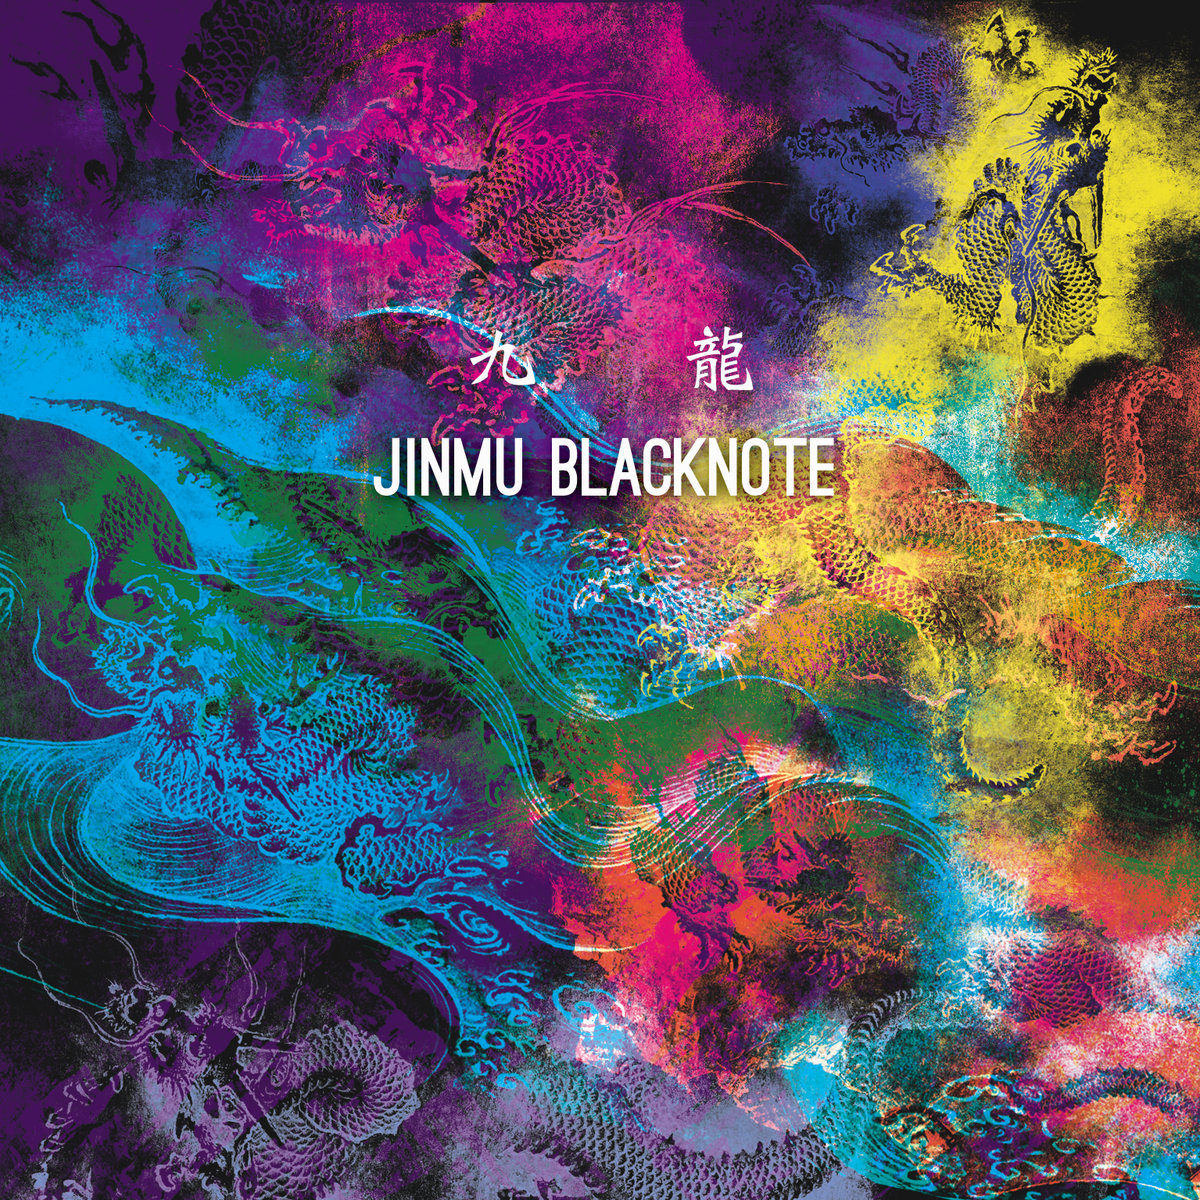 JINMU BLACKNOTE / 【九龍 - Kowloon】リリース